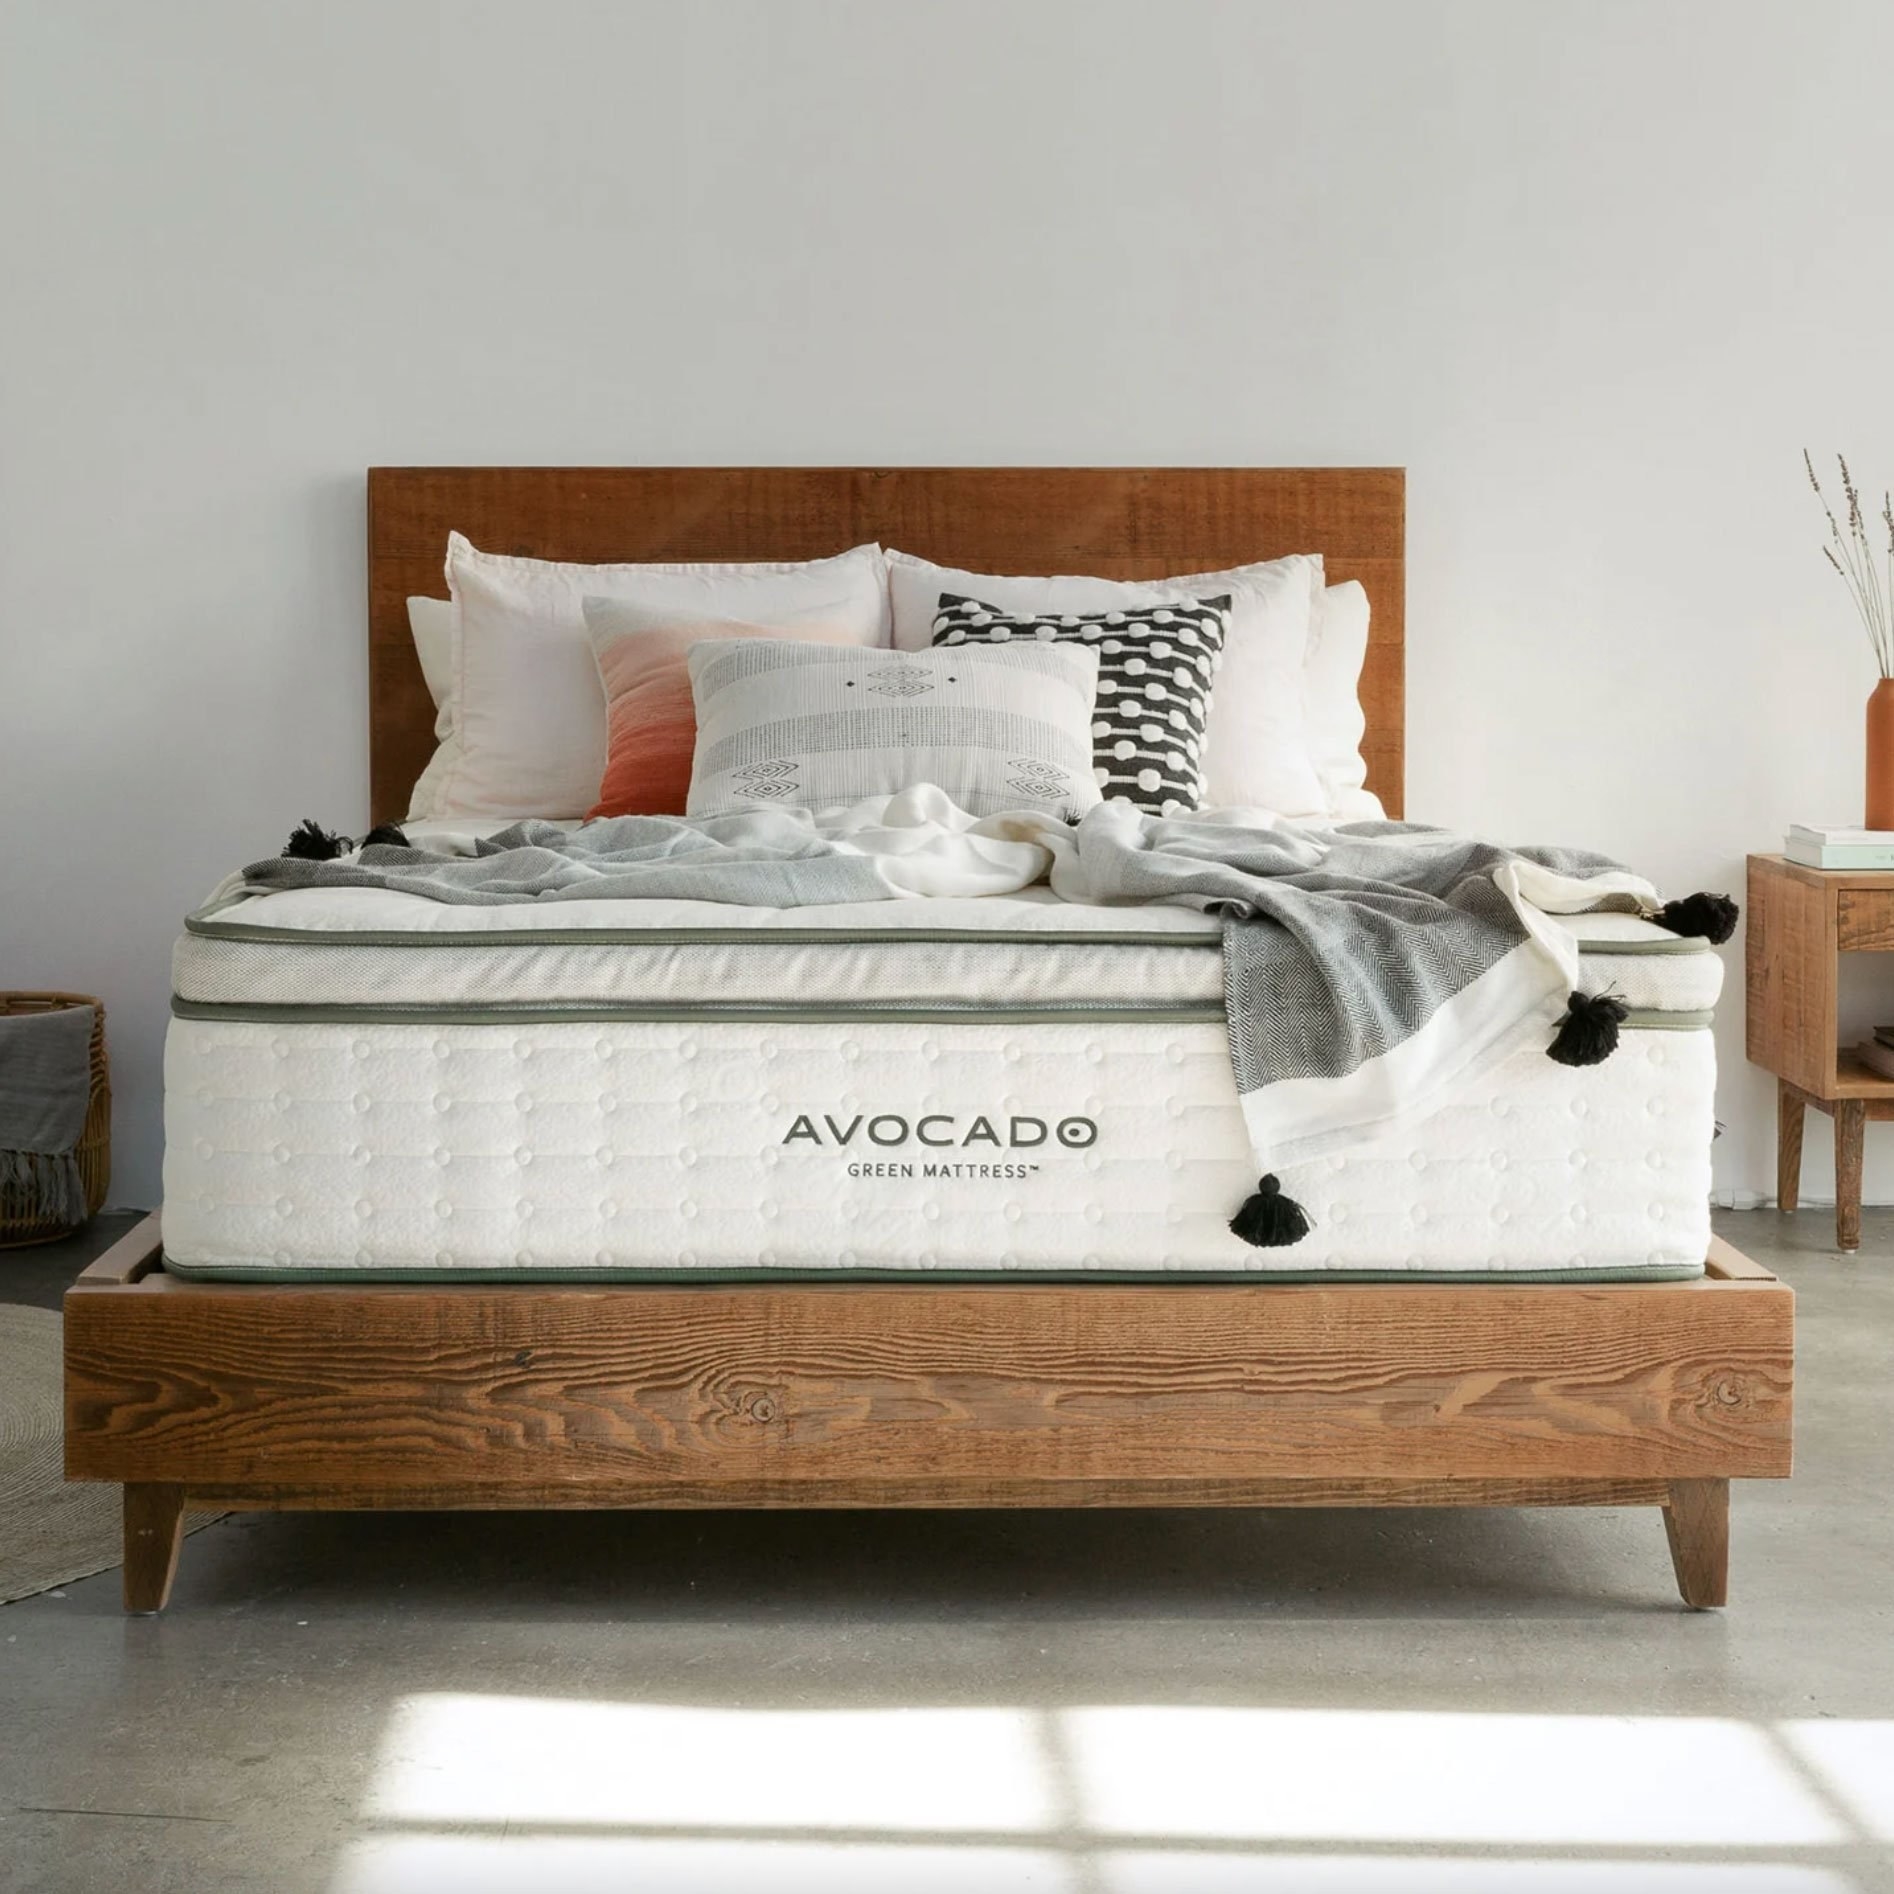 Avocado mattress styled on their wooden platform bed